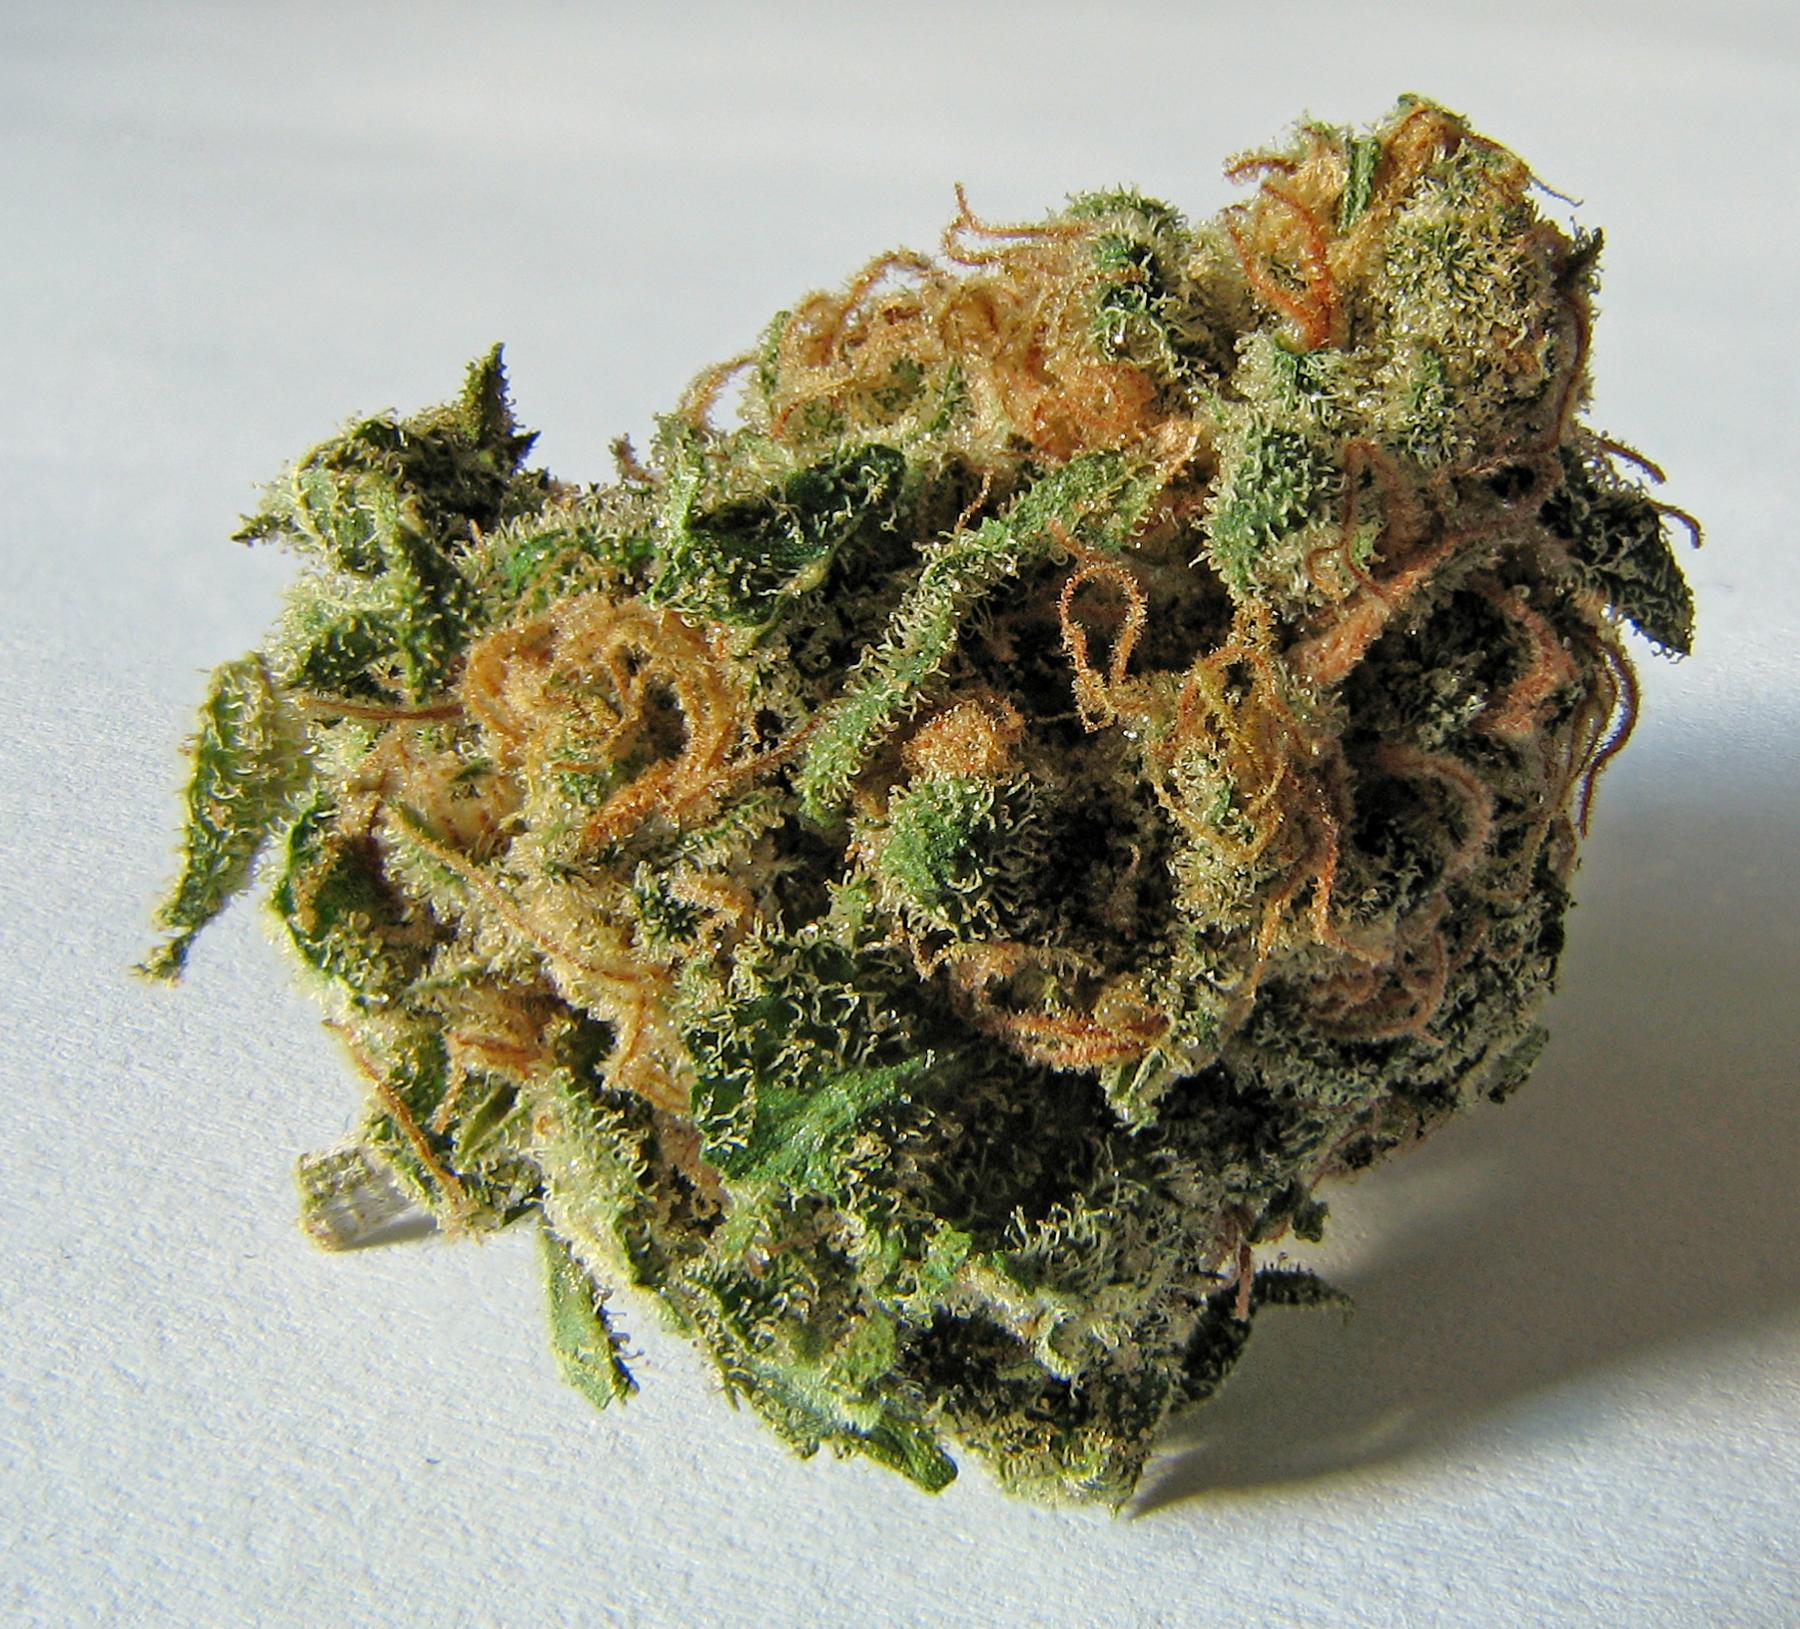 Image of cannabis strain, Cannabis - File:Macro cannabis bud.jpg